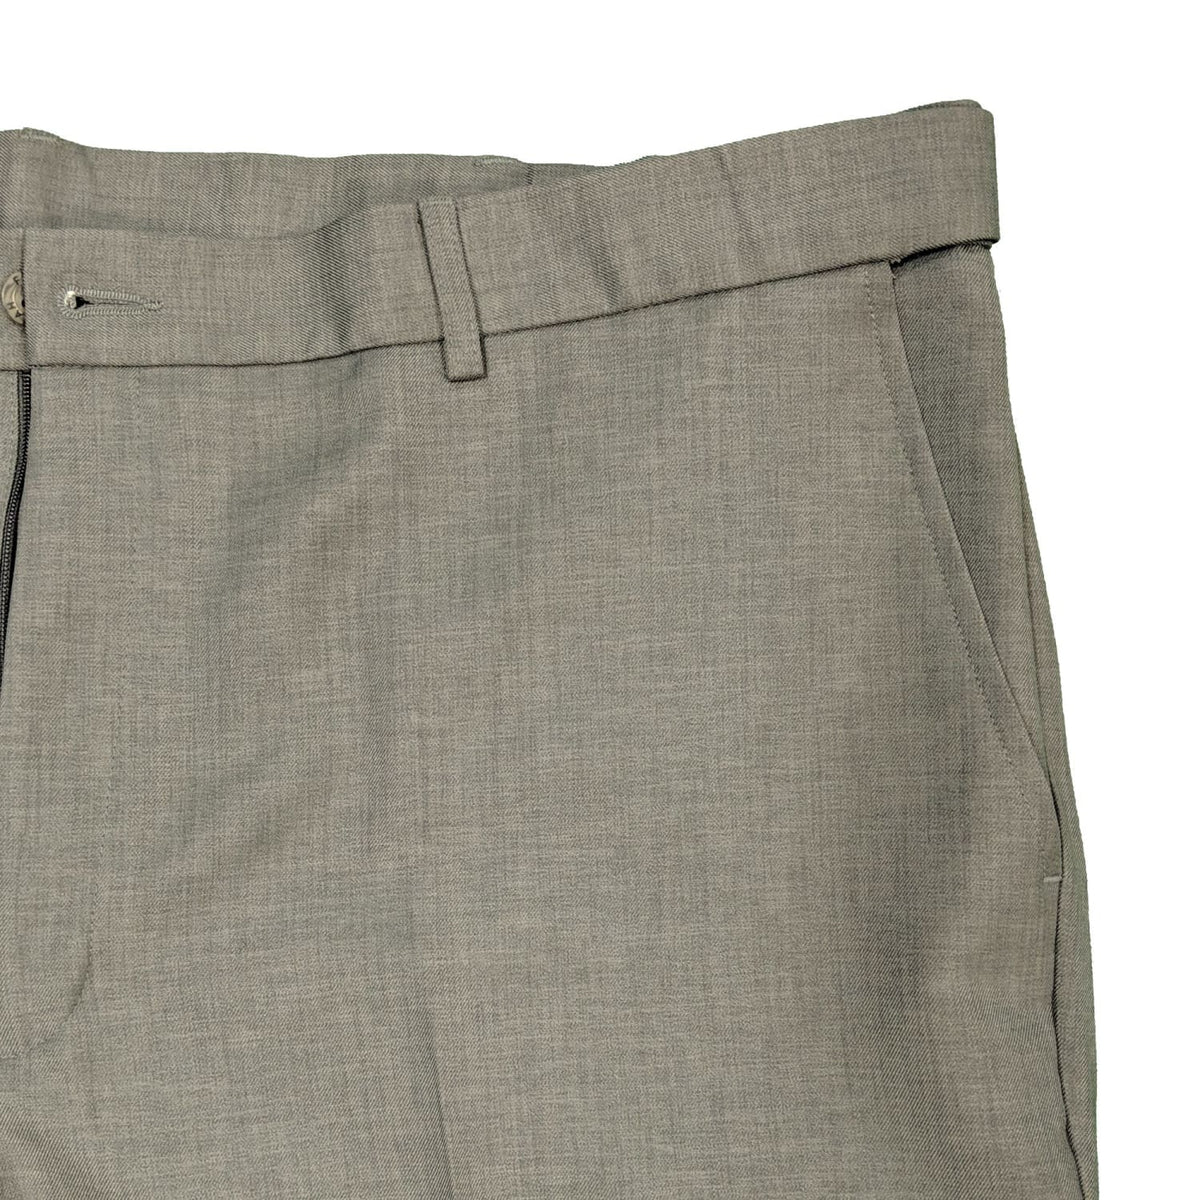 farah trousers 263205 grey 1 back pocket 2 front pockets 42 48